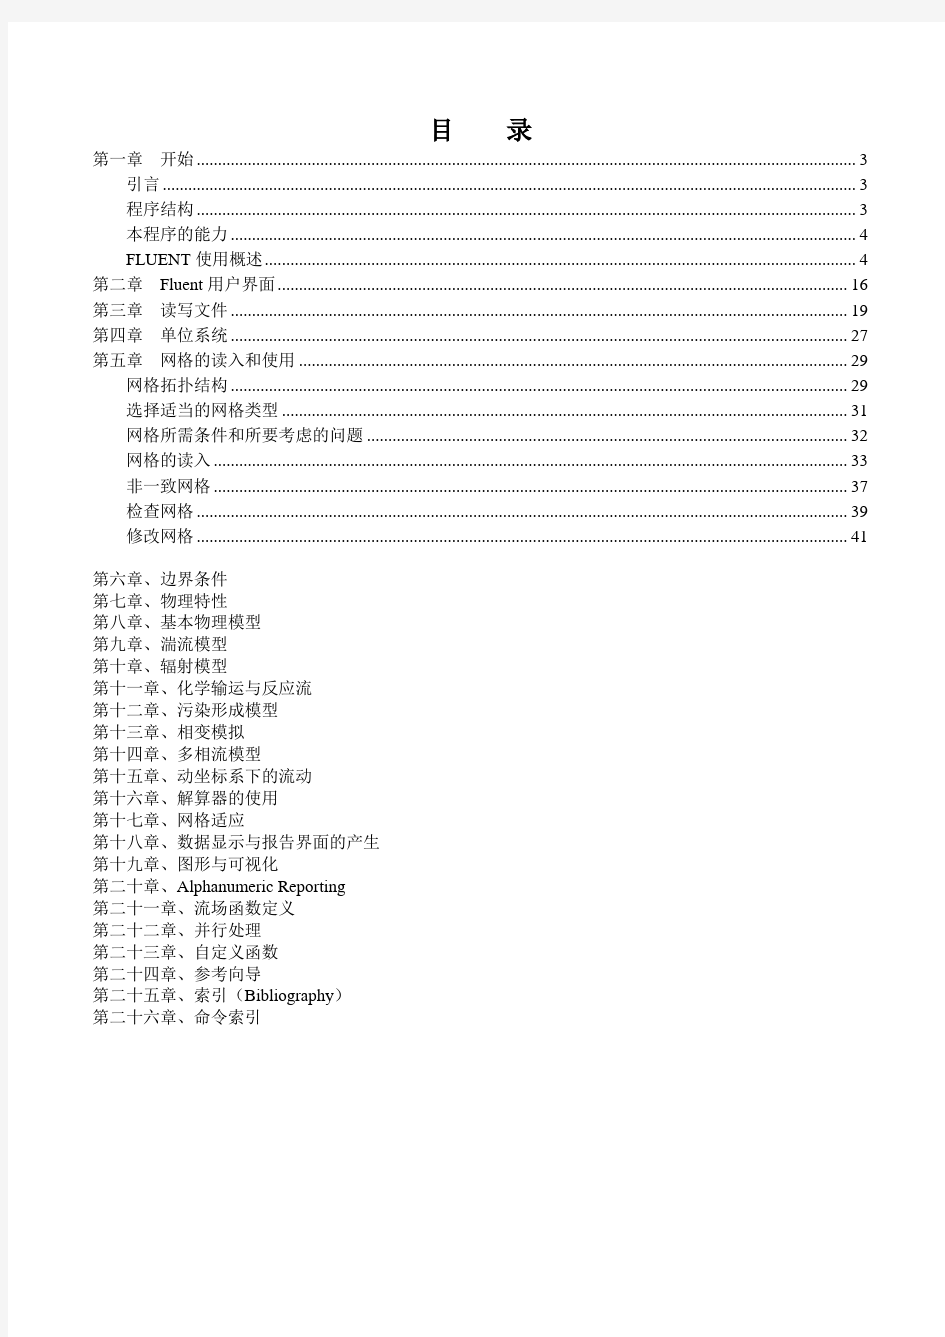 FLUENT中文手册(简化版)